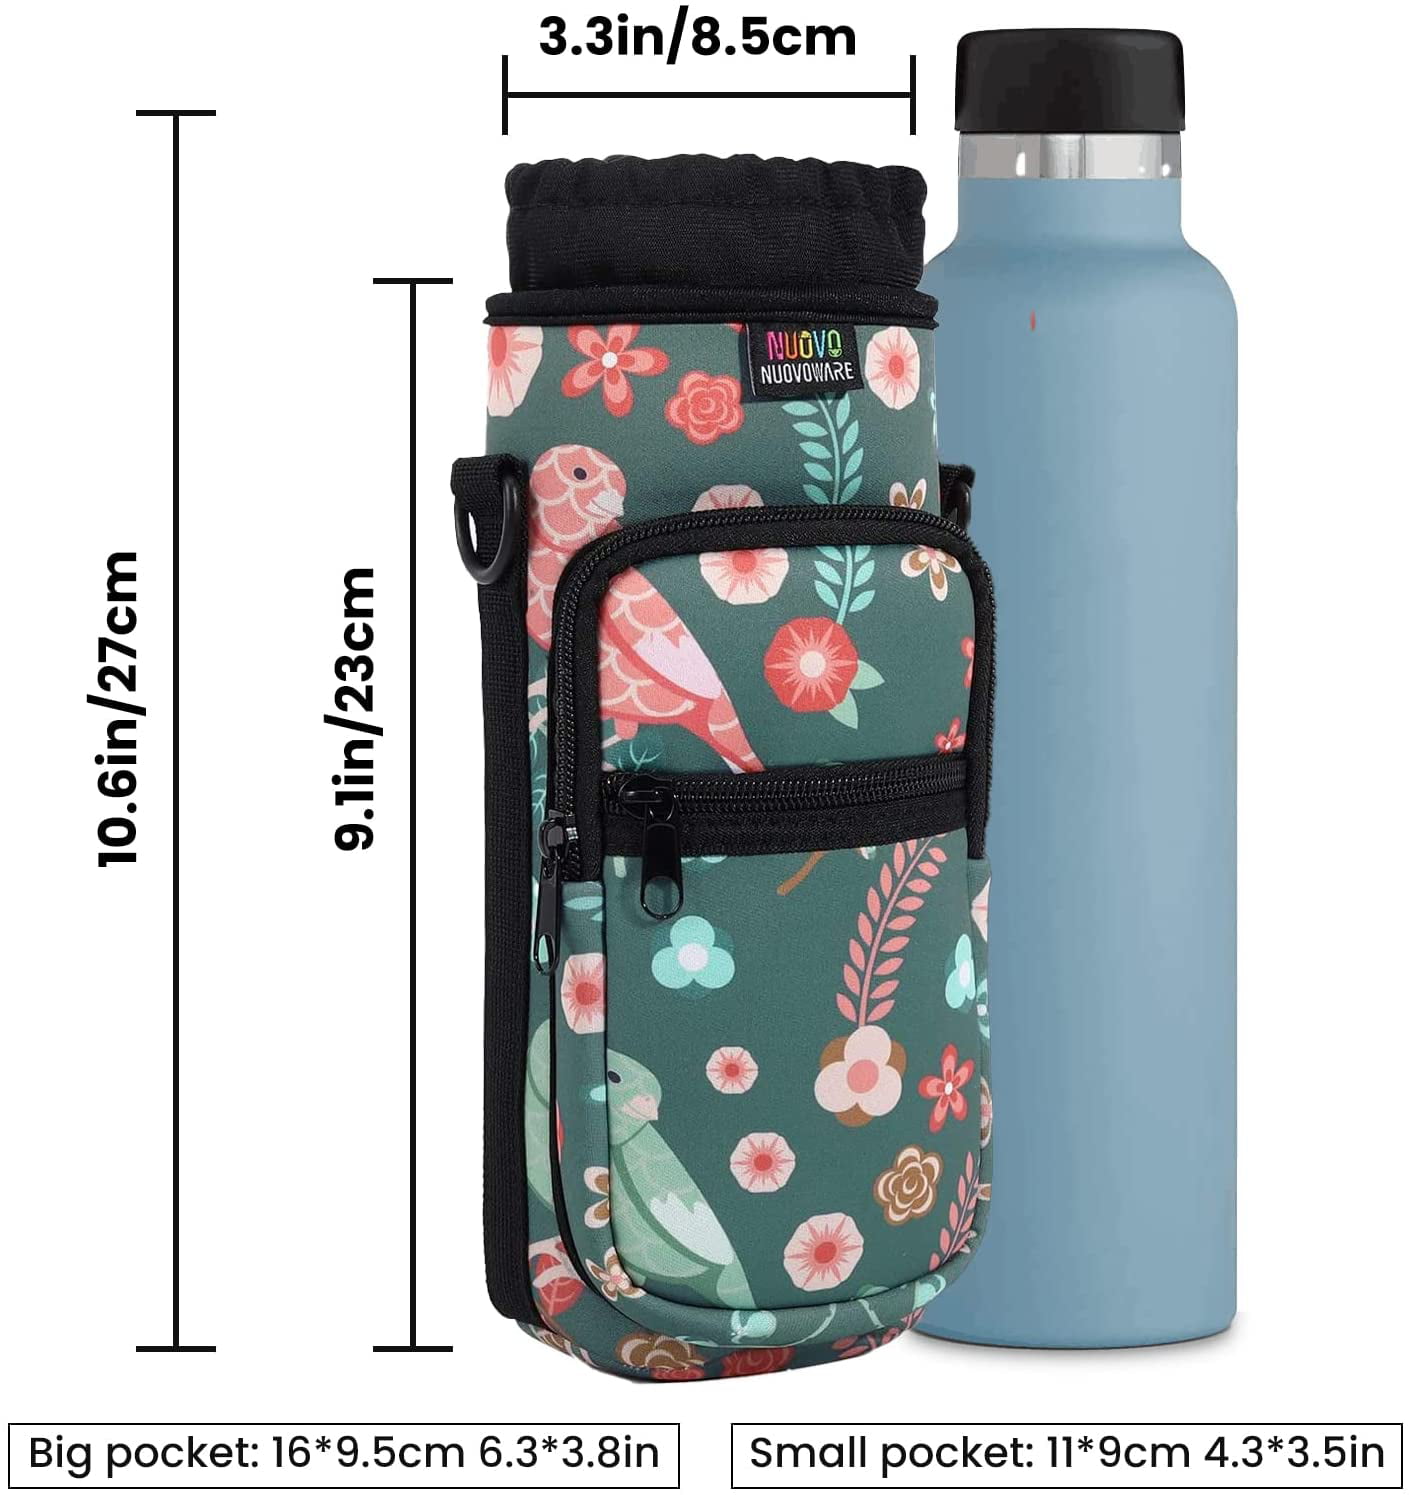 Nuovoware Water Bottle Carrier Bag Adjustable Shoulder Hand Strap 2 Pocket Sling Neoprene Sleeve Sports Water Bottle Accessories for Men Women Kids Hiking Travelling Camping Bottle Pouch Holder 